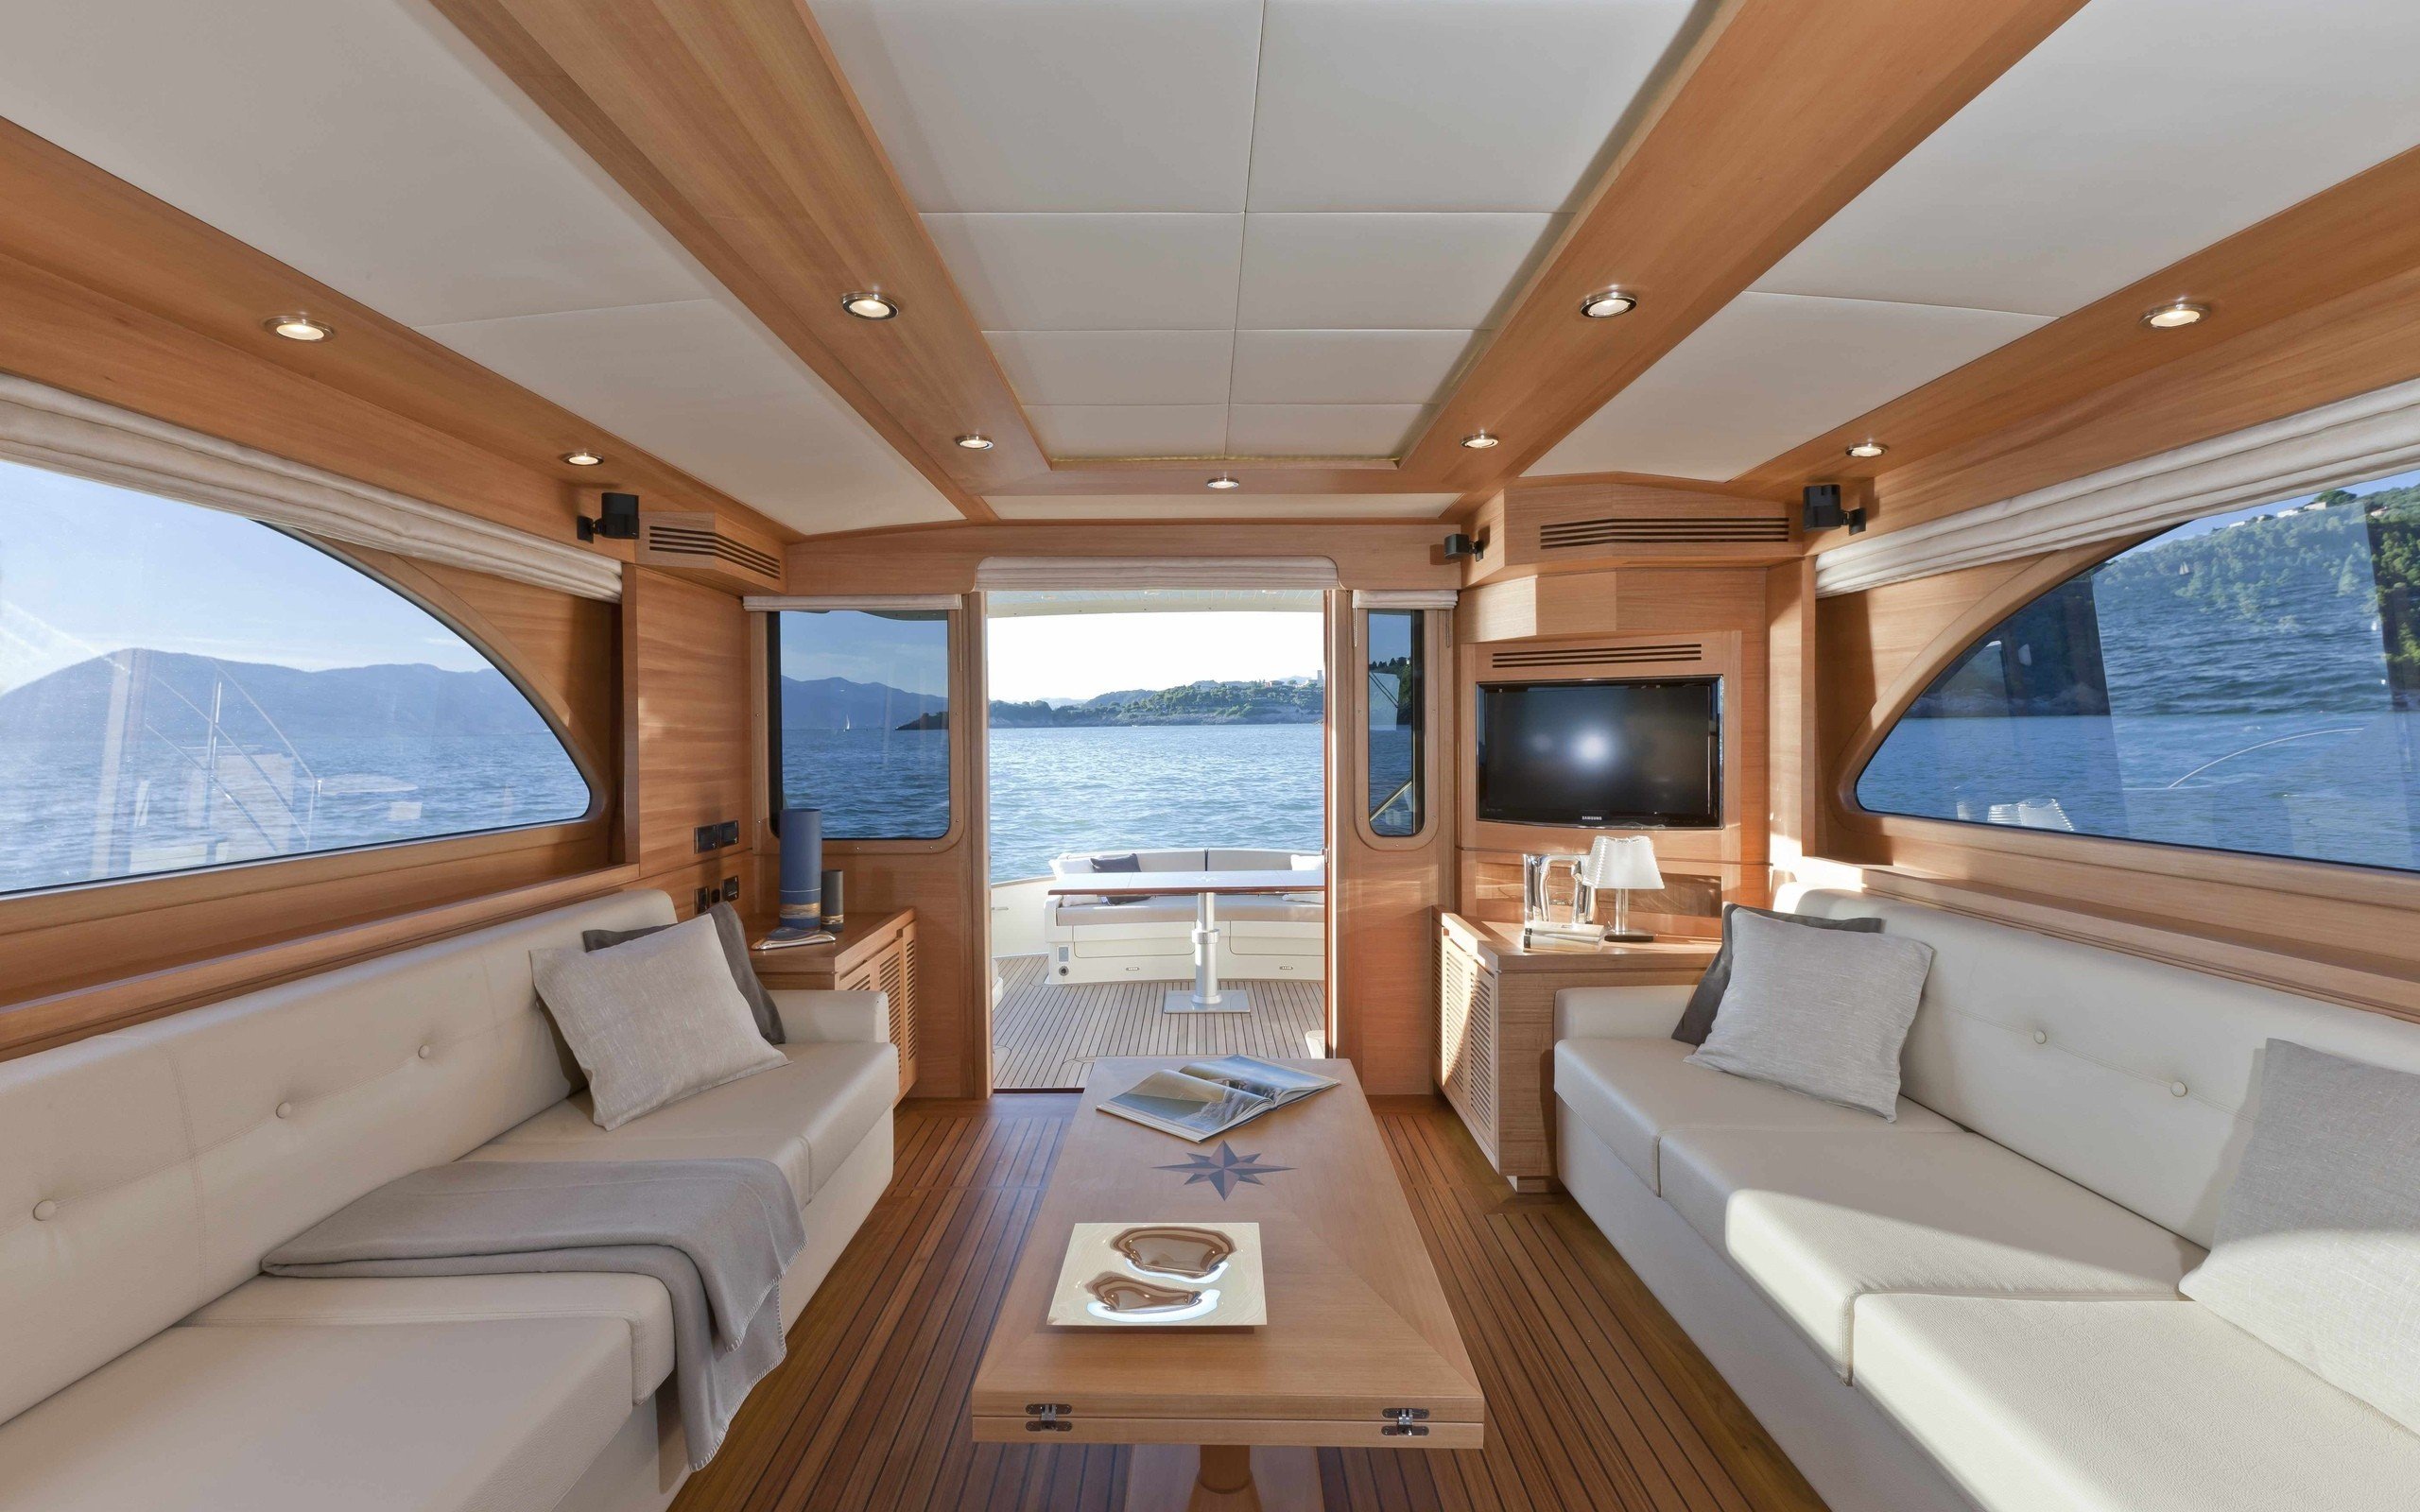 121652 Boat Yachts Interiors 